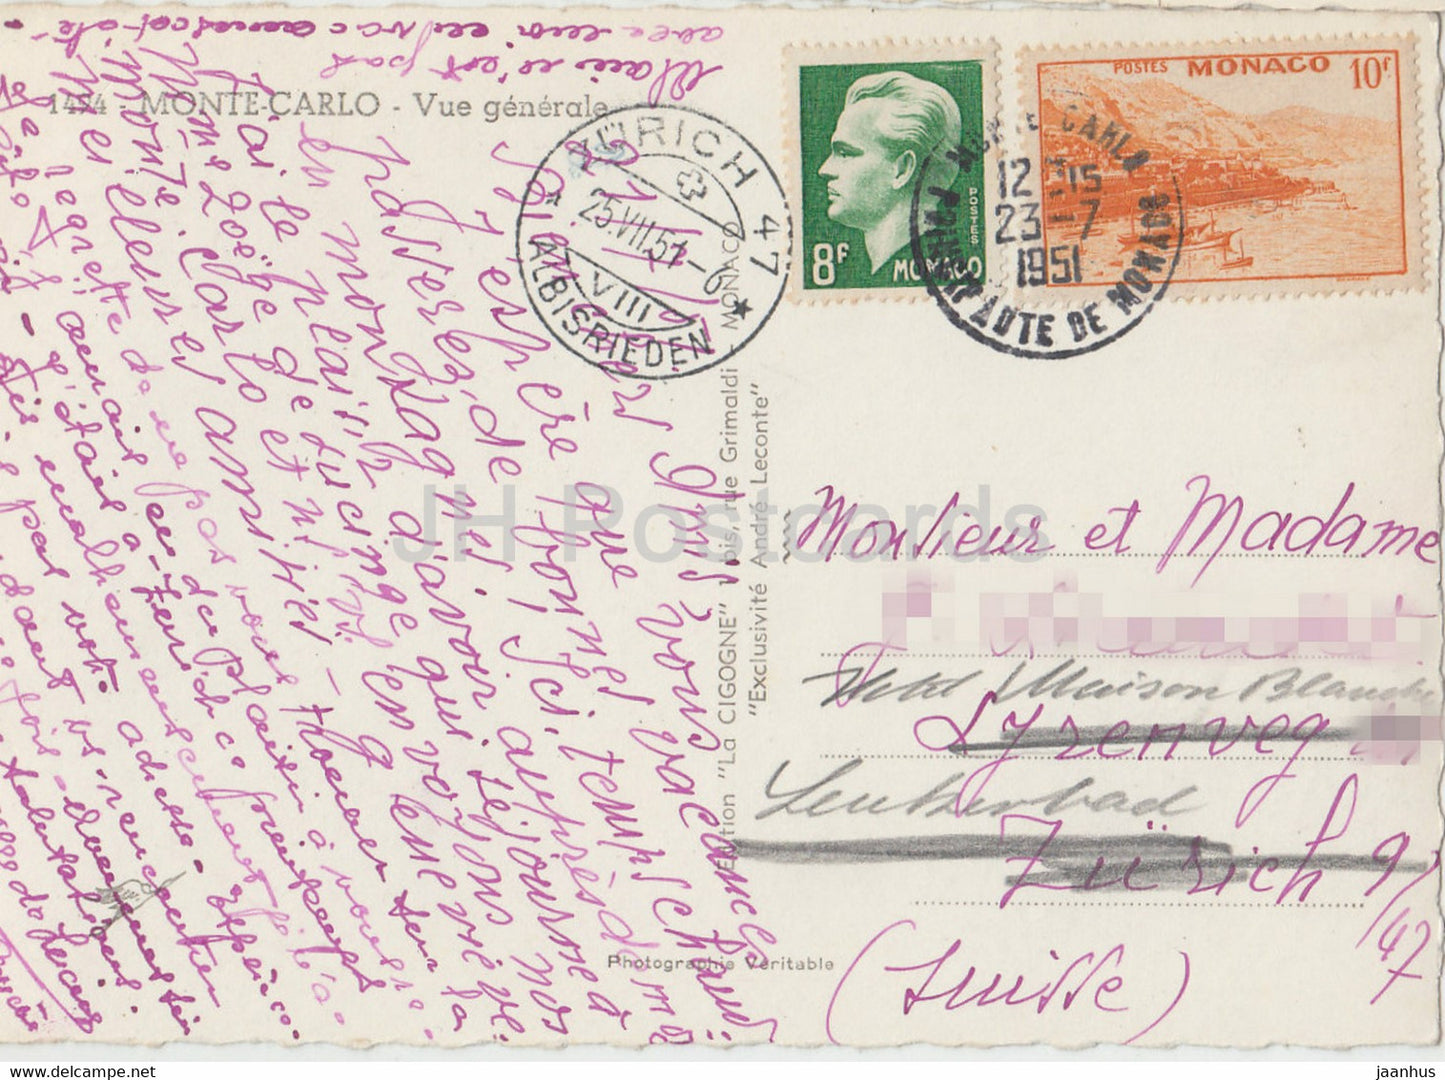 Monte Carlo - Vue Generale - 1494 - old postcard - 1951 - Monaco - used